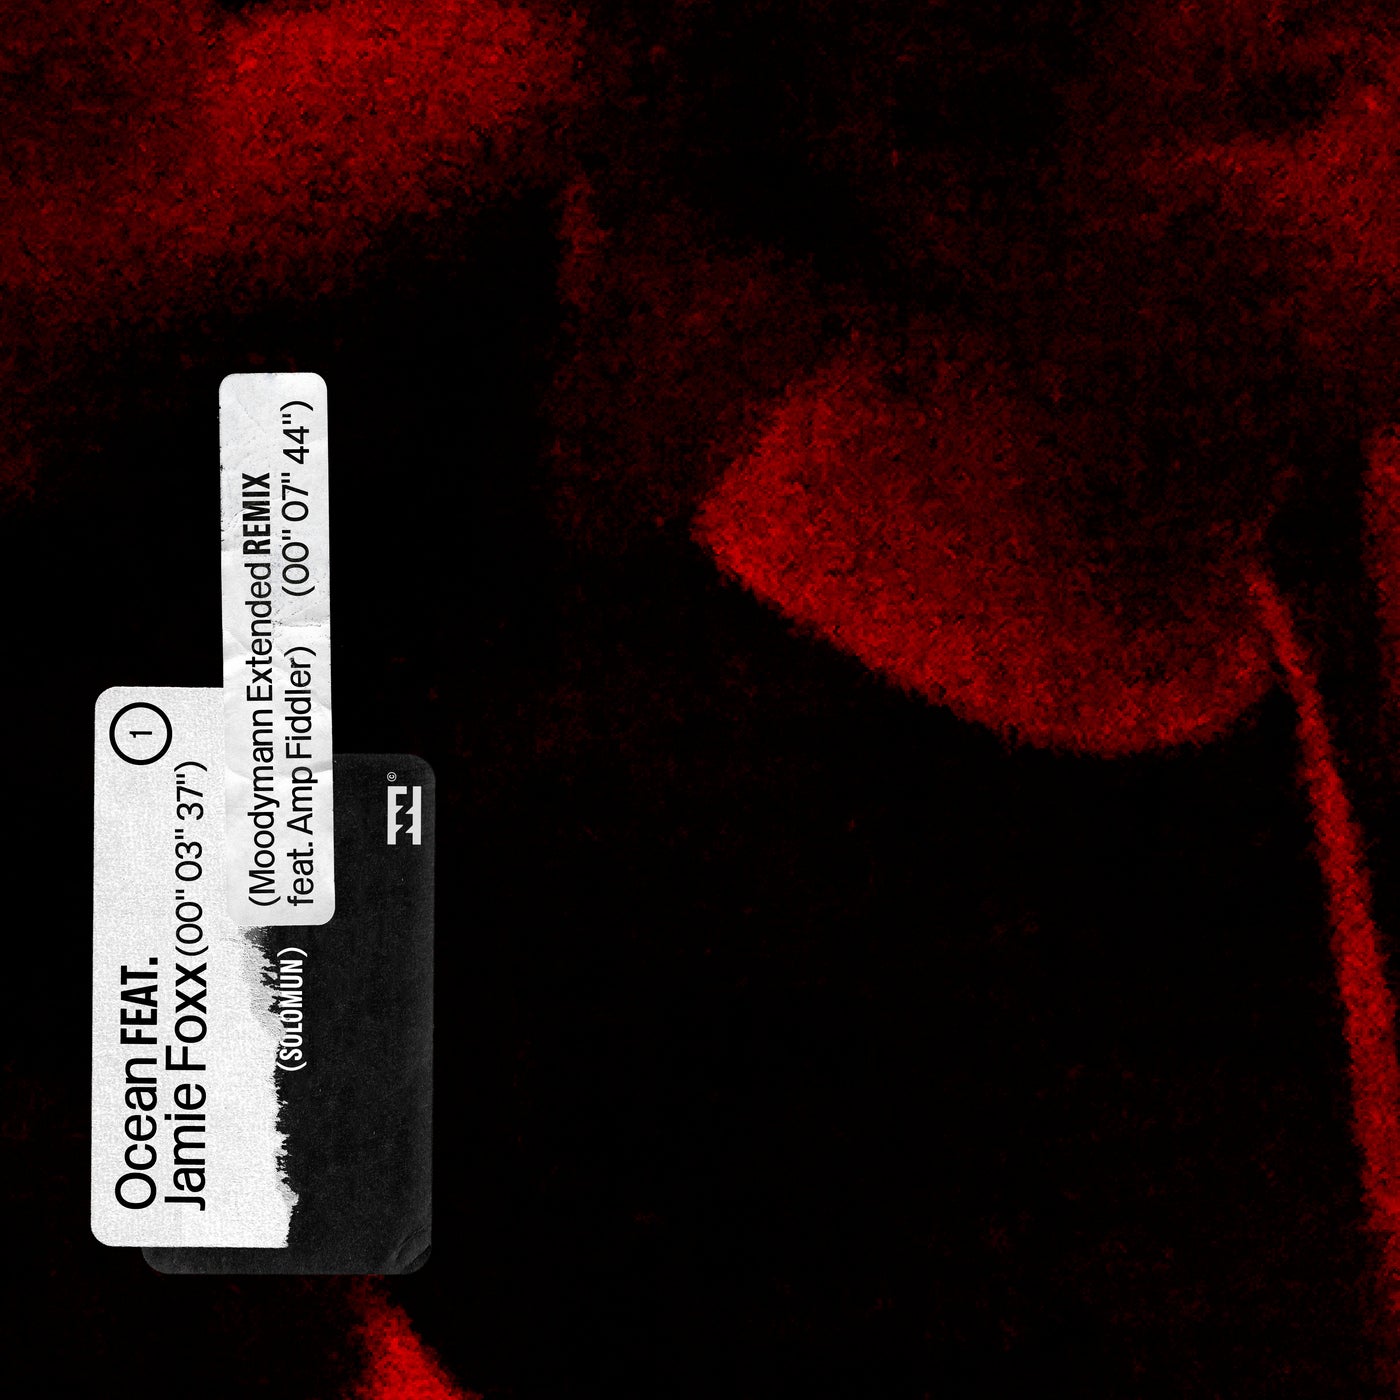 Download Solomun – Ocean feat. Jamie Foxx (Moodymann Extended Remix, Amp Fiddler) on Electrobuzz